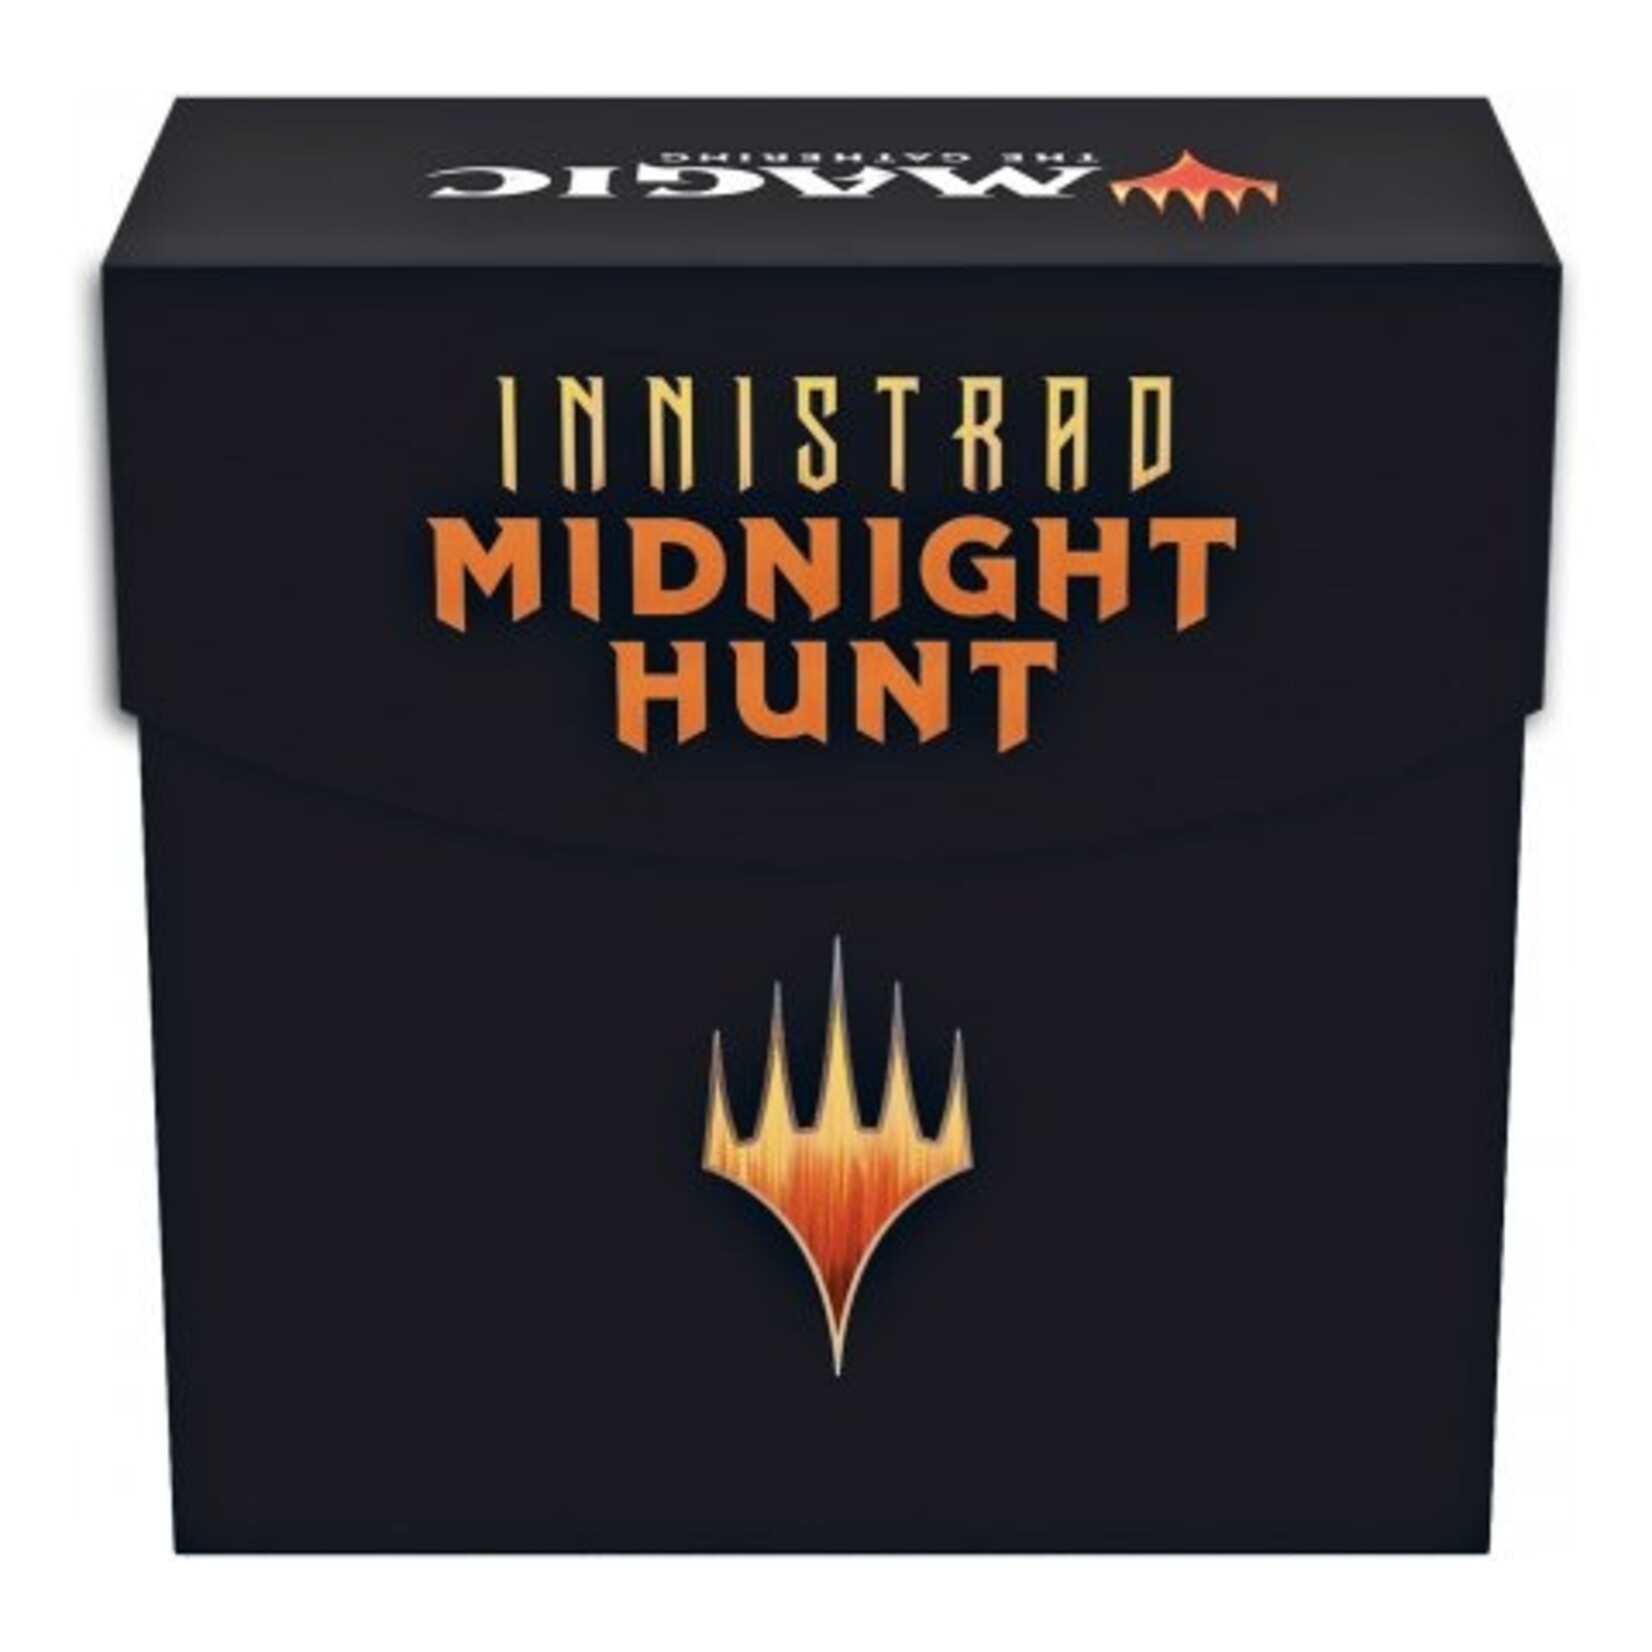 Midnight hunt: Prerelease pack